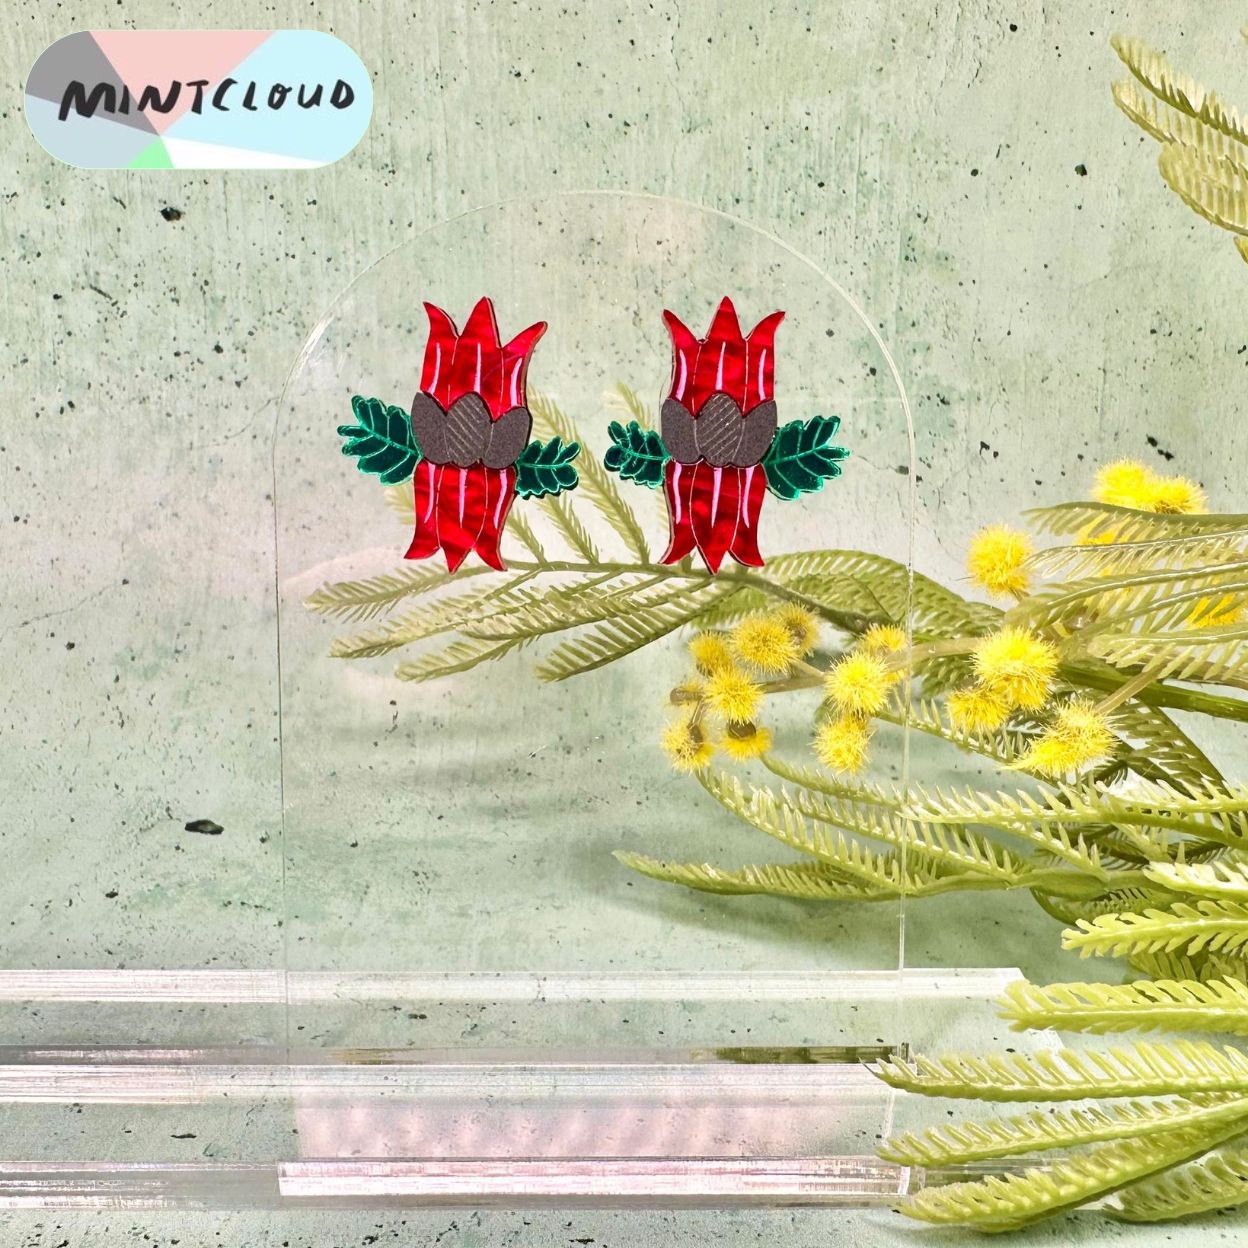 Mintcloud x Little Harlequin Studio Collaboration Earrings - Sturt's Desert Pea Studs